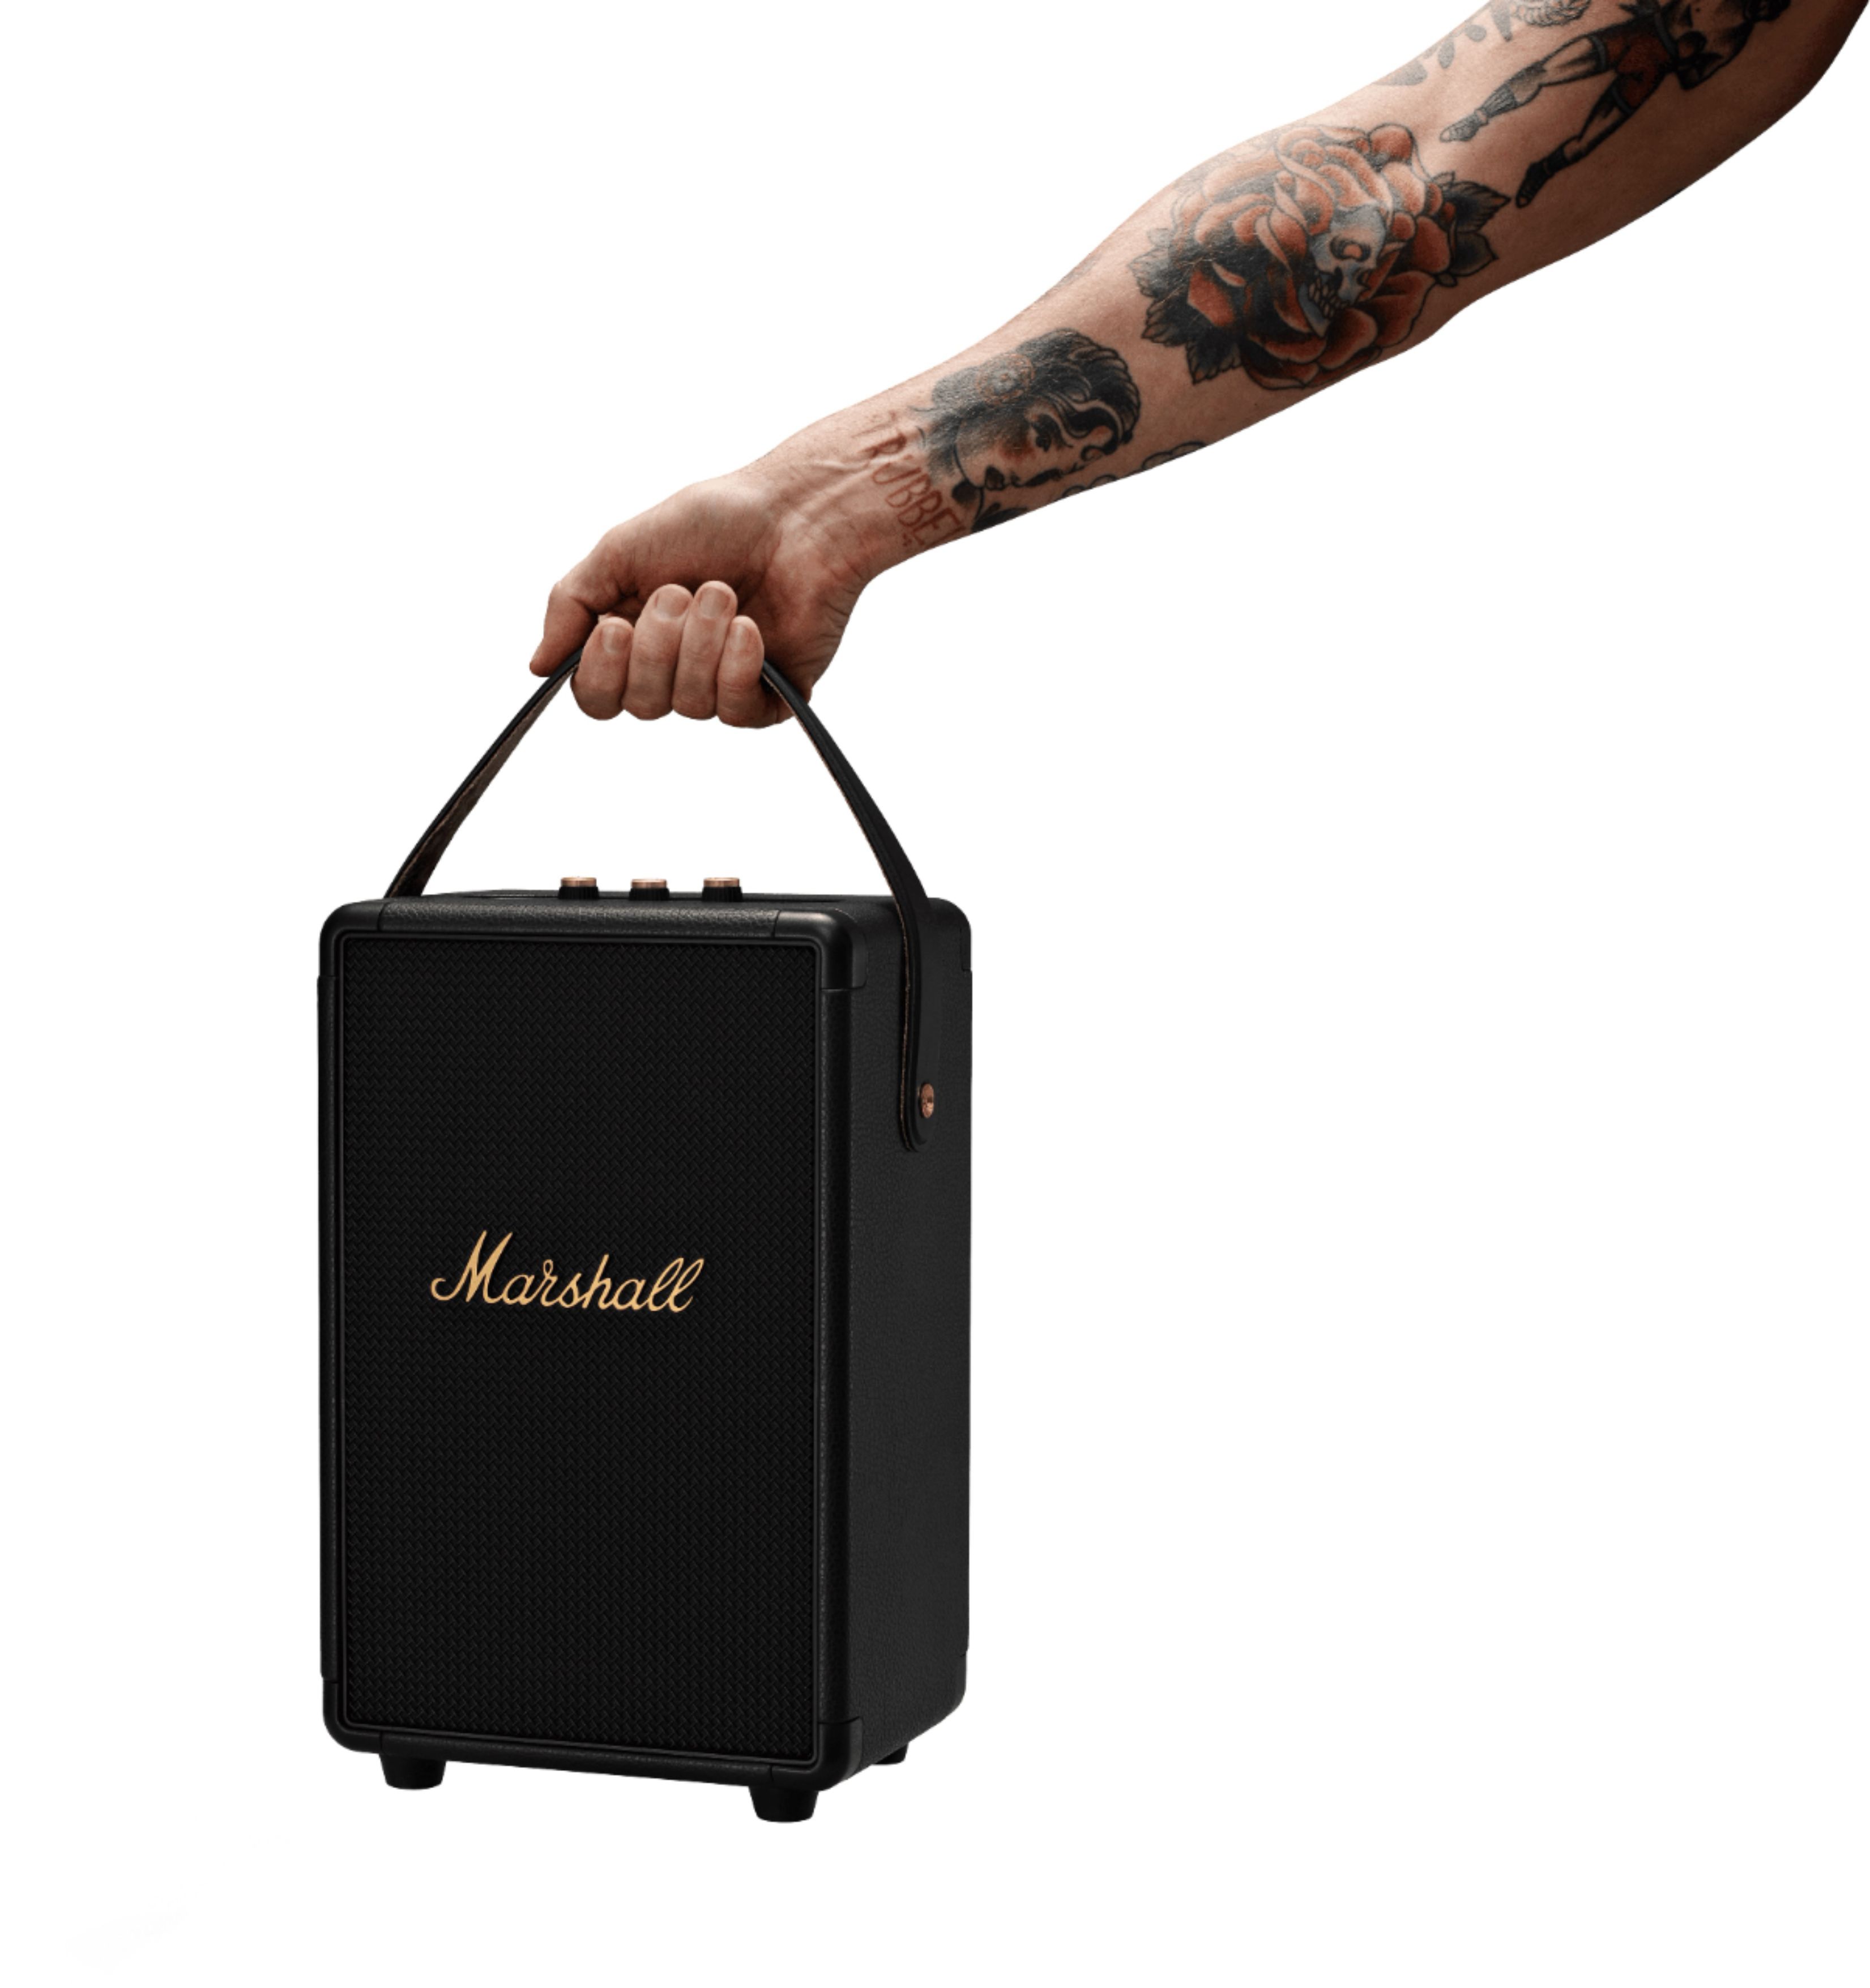 Marshall Tufton Portable Bluetooth Speaker Black & Brass 1006118 - Best Buy